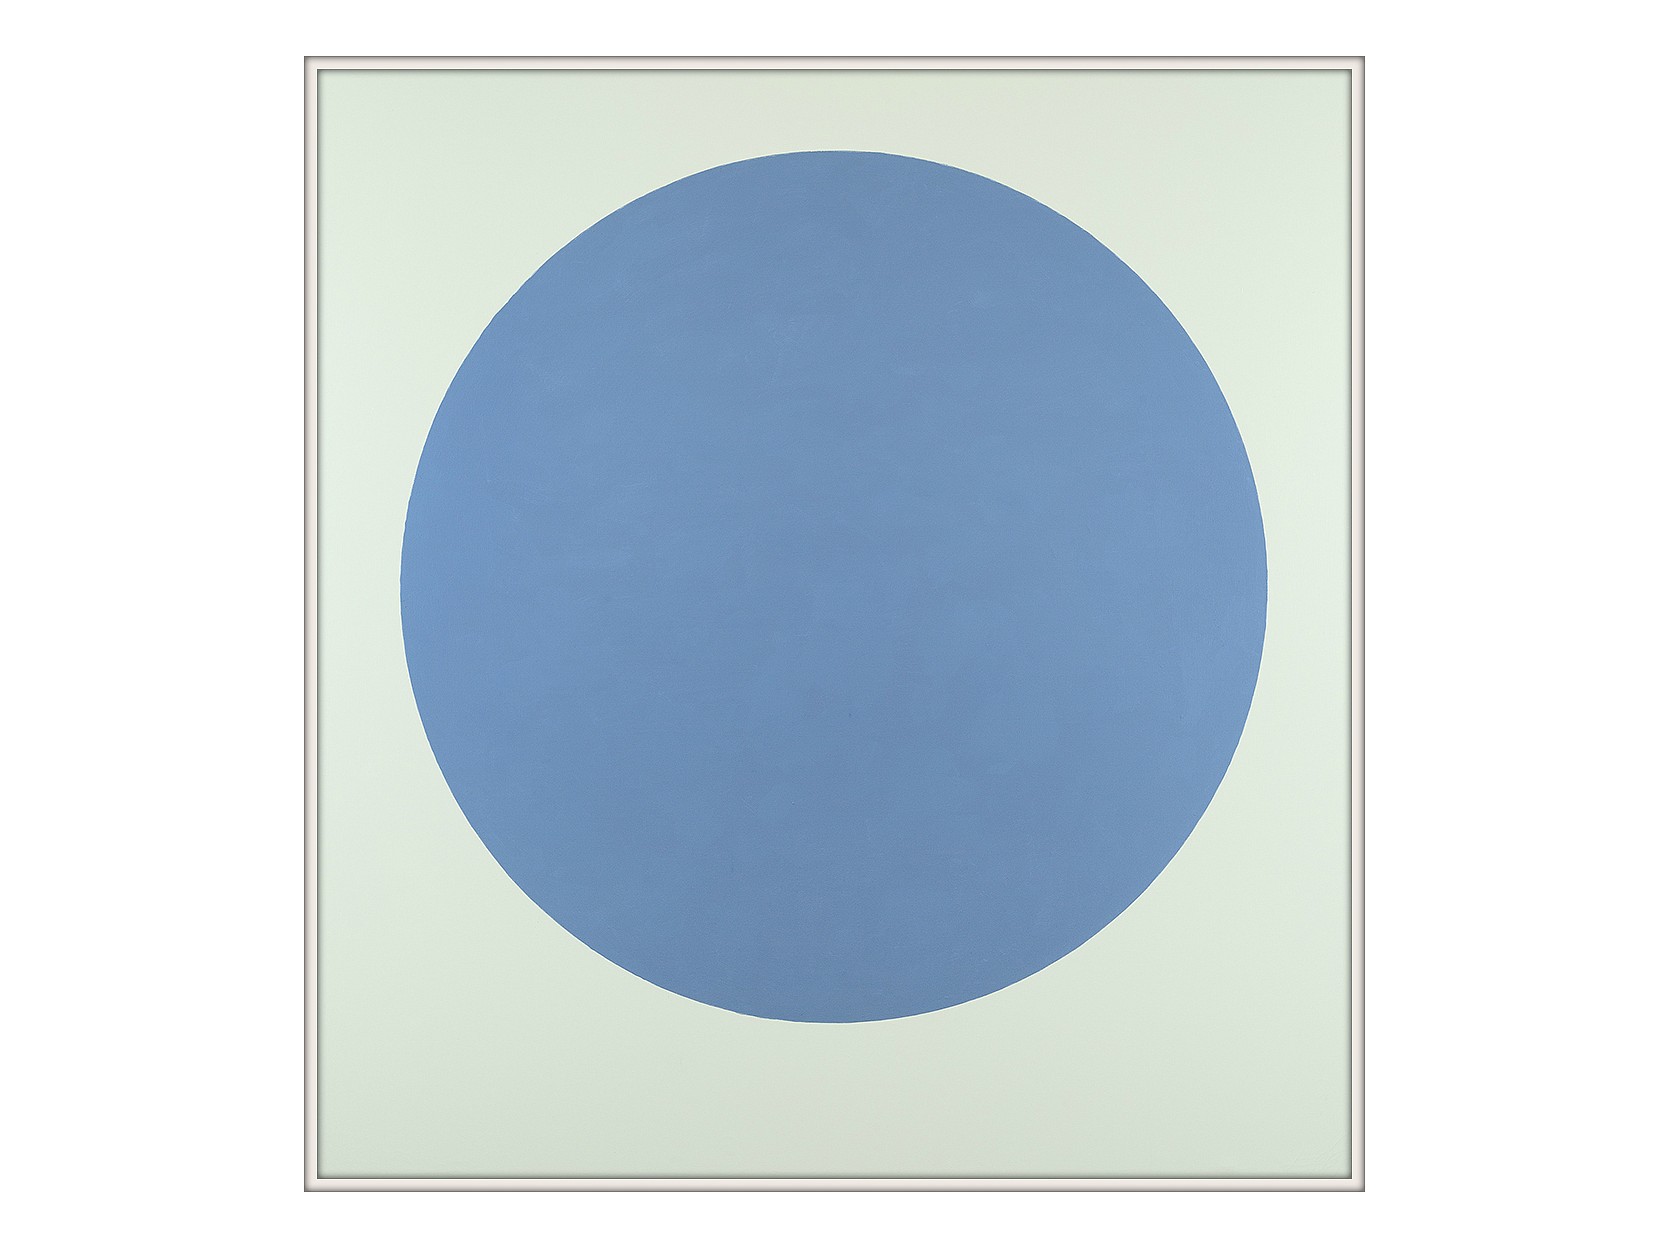 PRESS RELEASE: Walter Darby Bannard | Minimal Color Field Paintings 1958-1965, Mar 19 - Apr 18, 2015